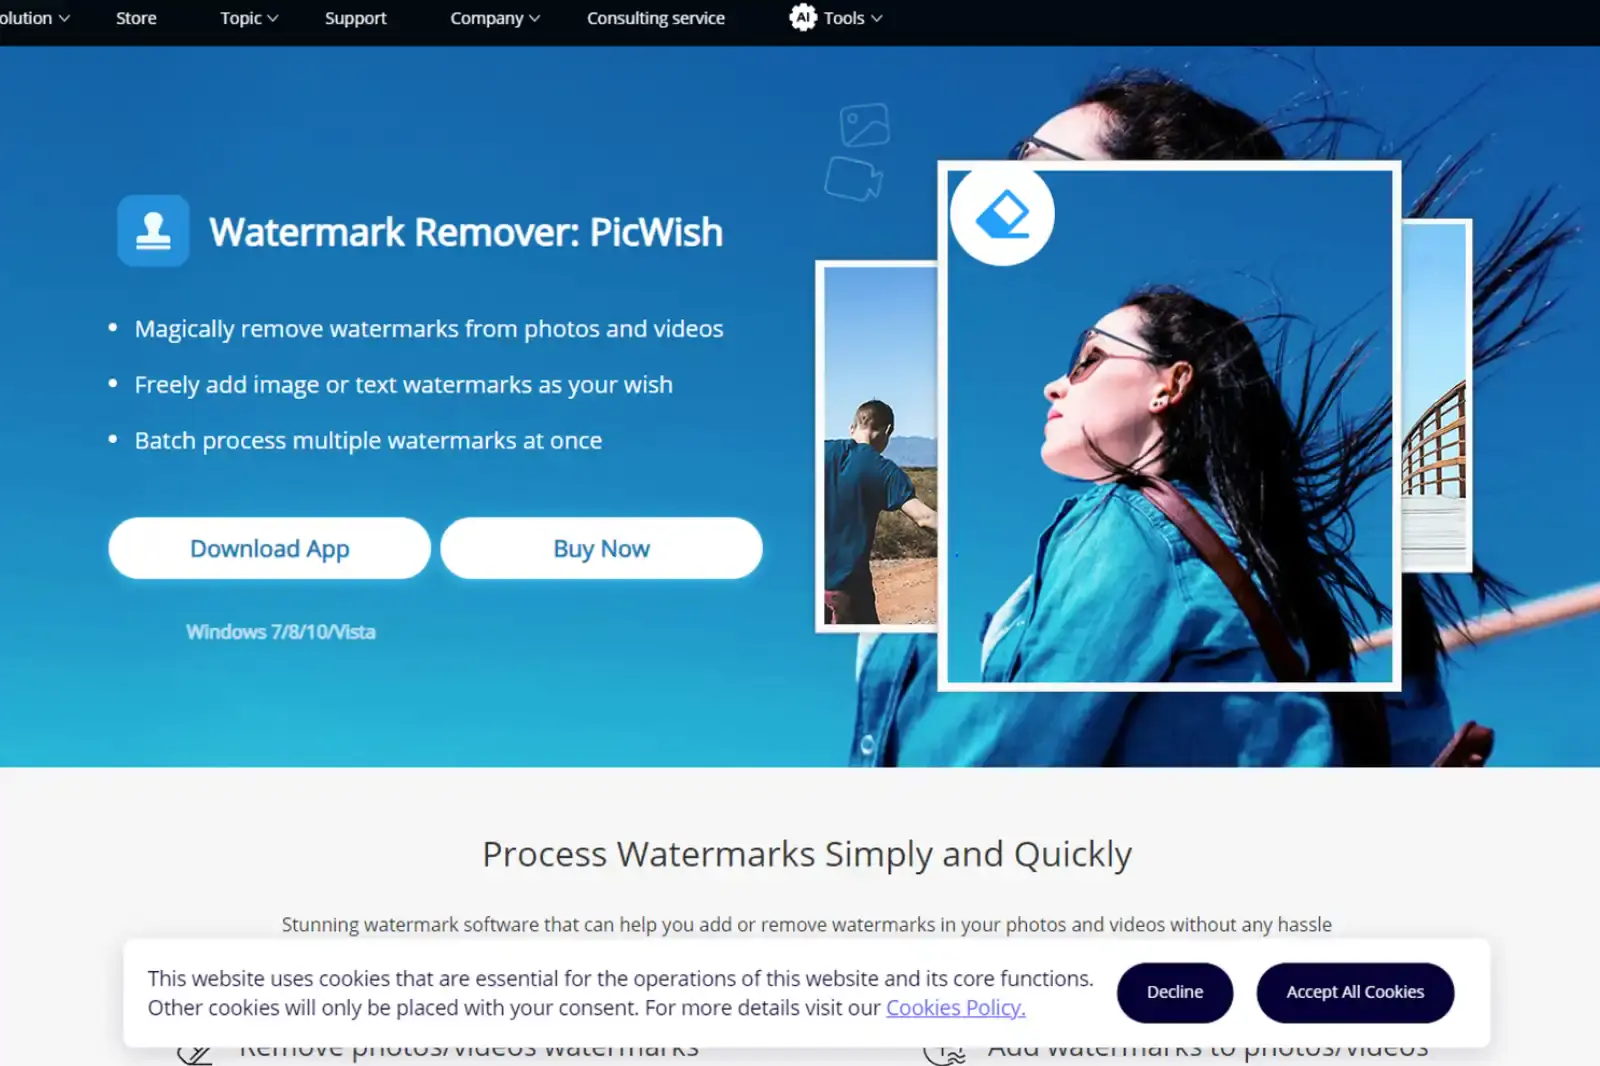 Apowersoft Online Watermark Remover